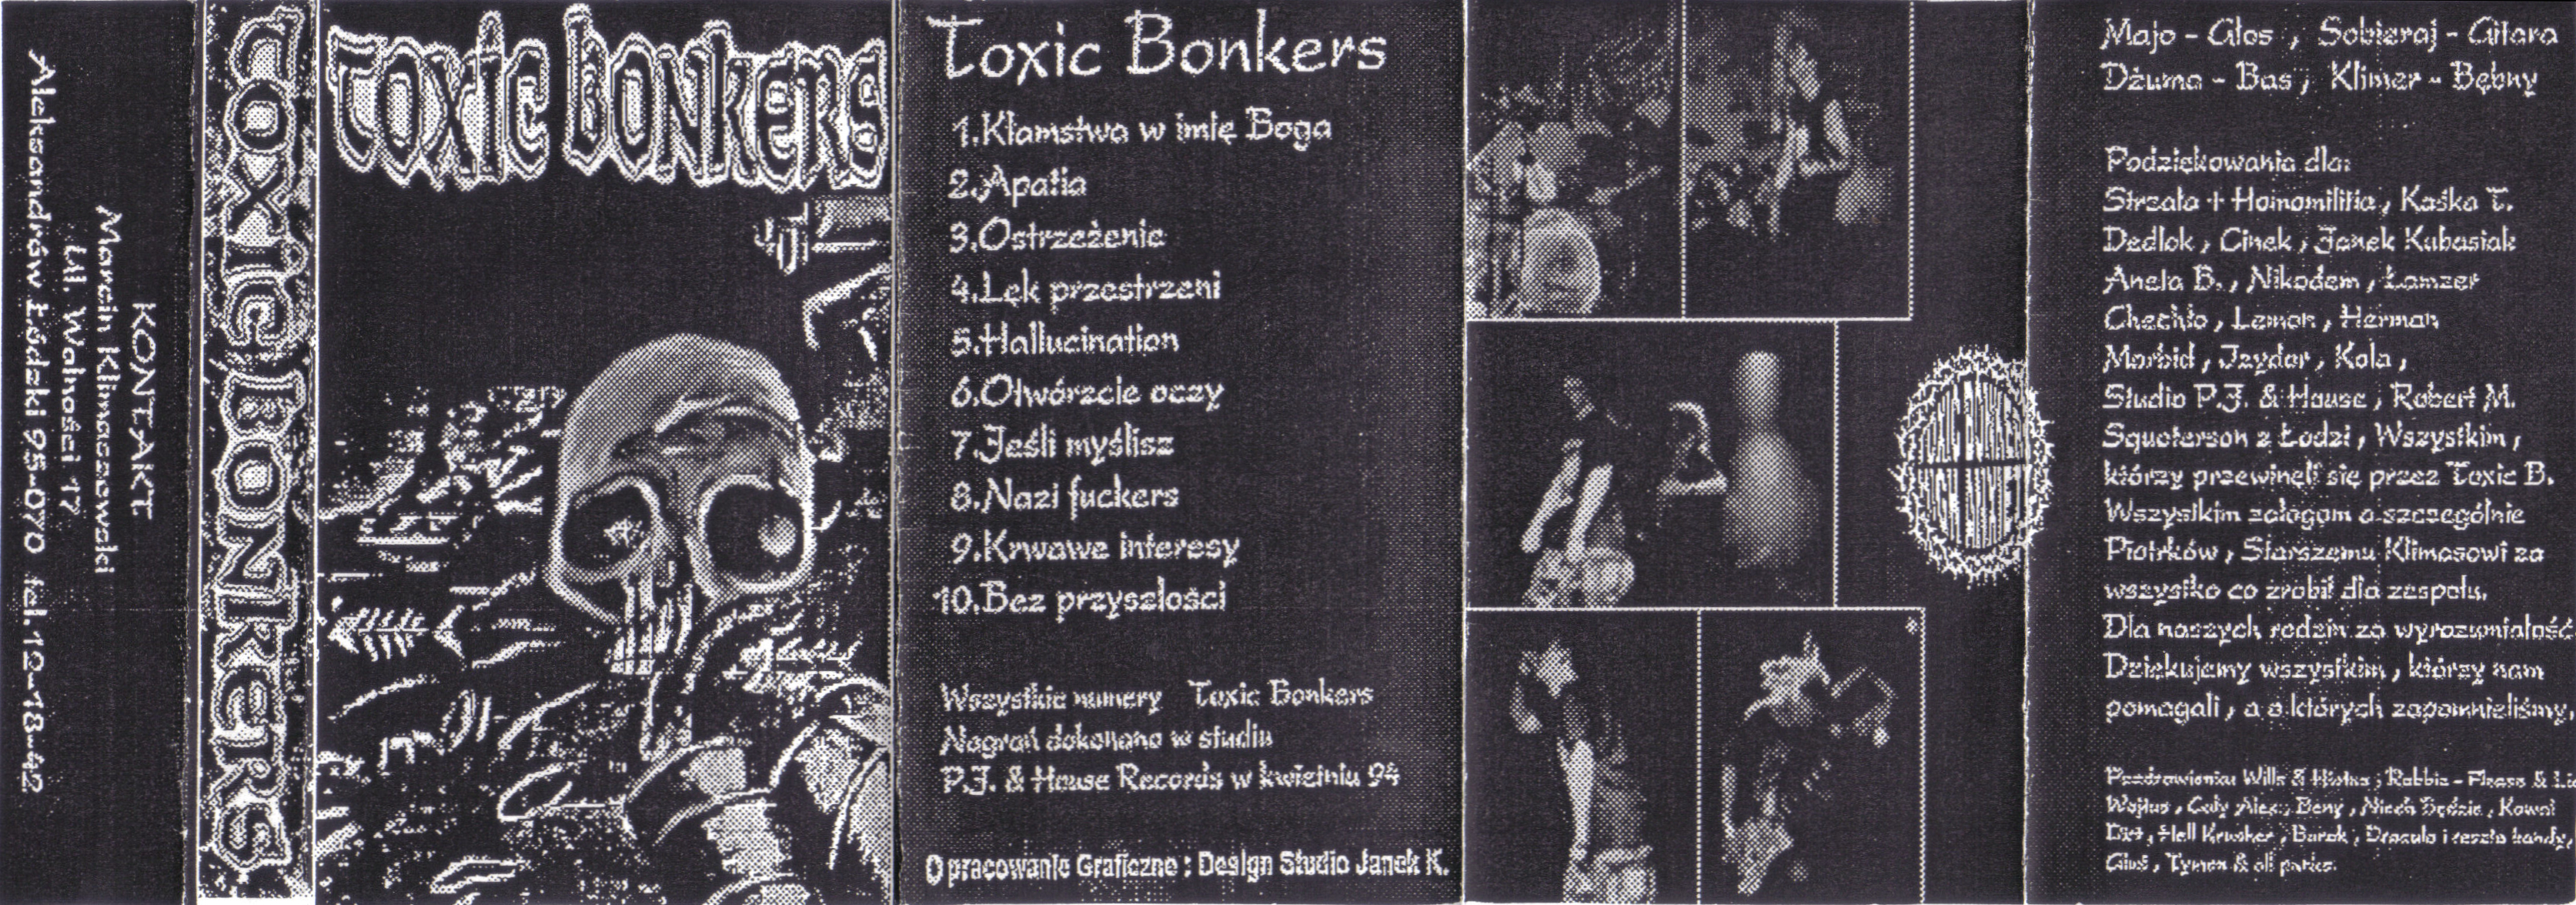 Toxic Bonkers  - Demo 1994 - 00-Toxic_Bonkers_Pol_-_Demo_1994_by_zuchu666-front_cover_MZ.jpg